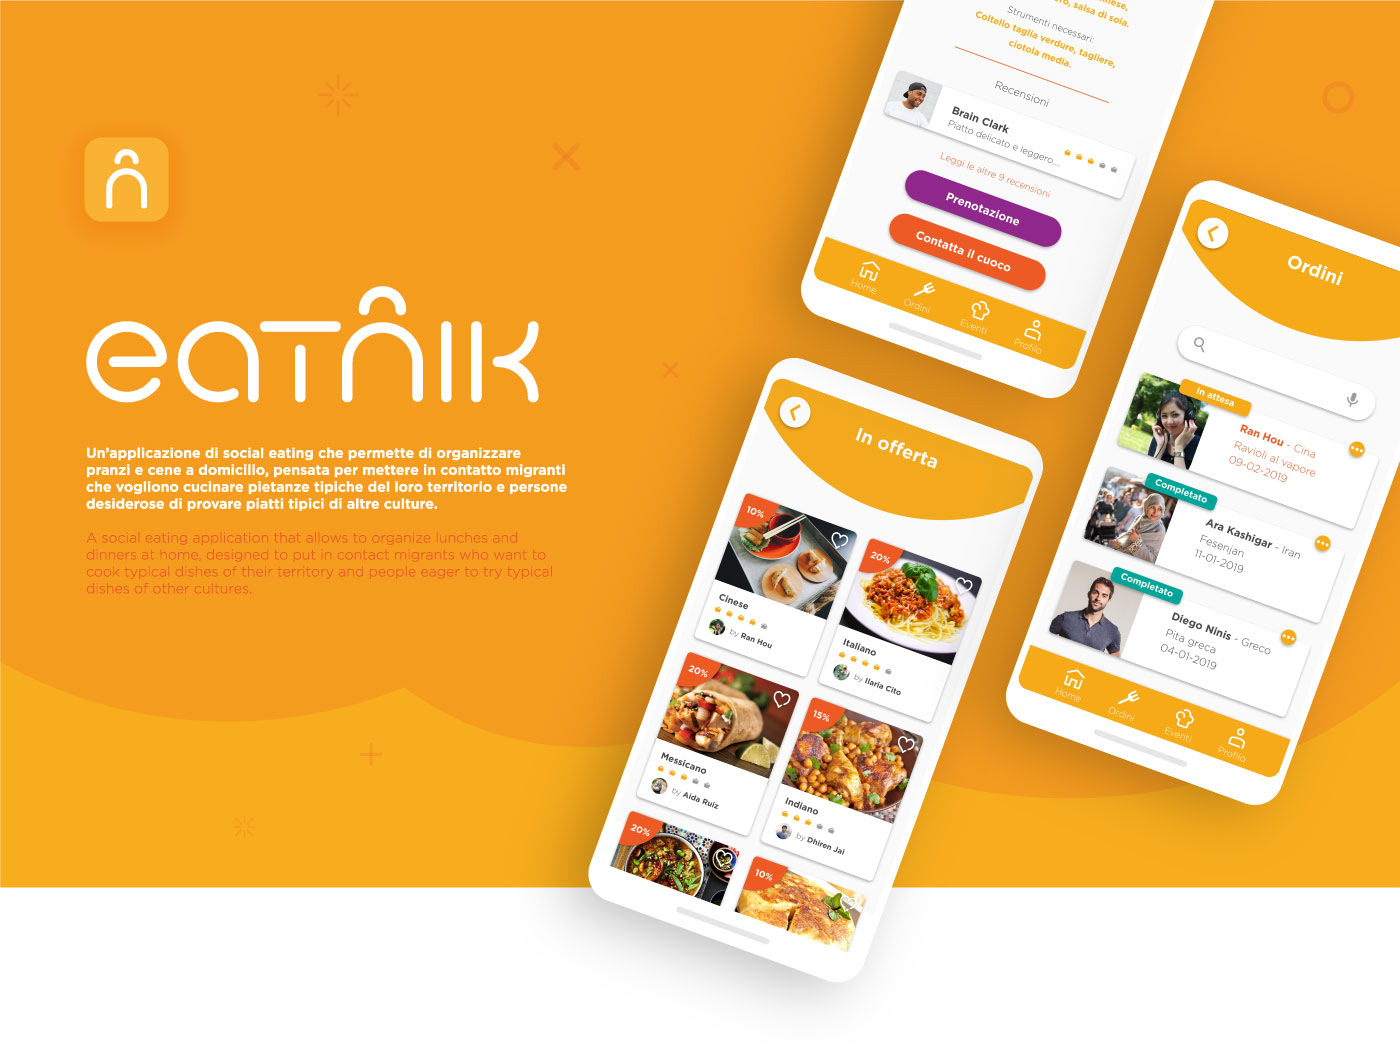 UI/UX Design user experience social eating food app app visual graphic logo user interface design